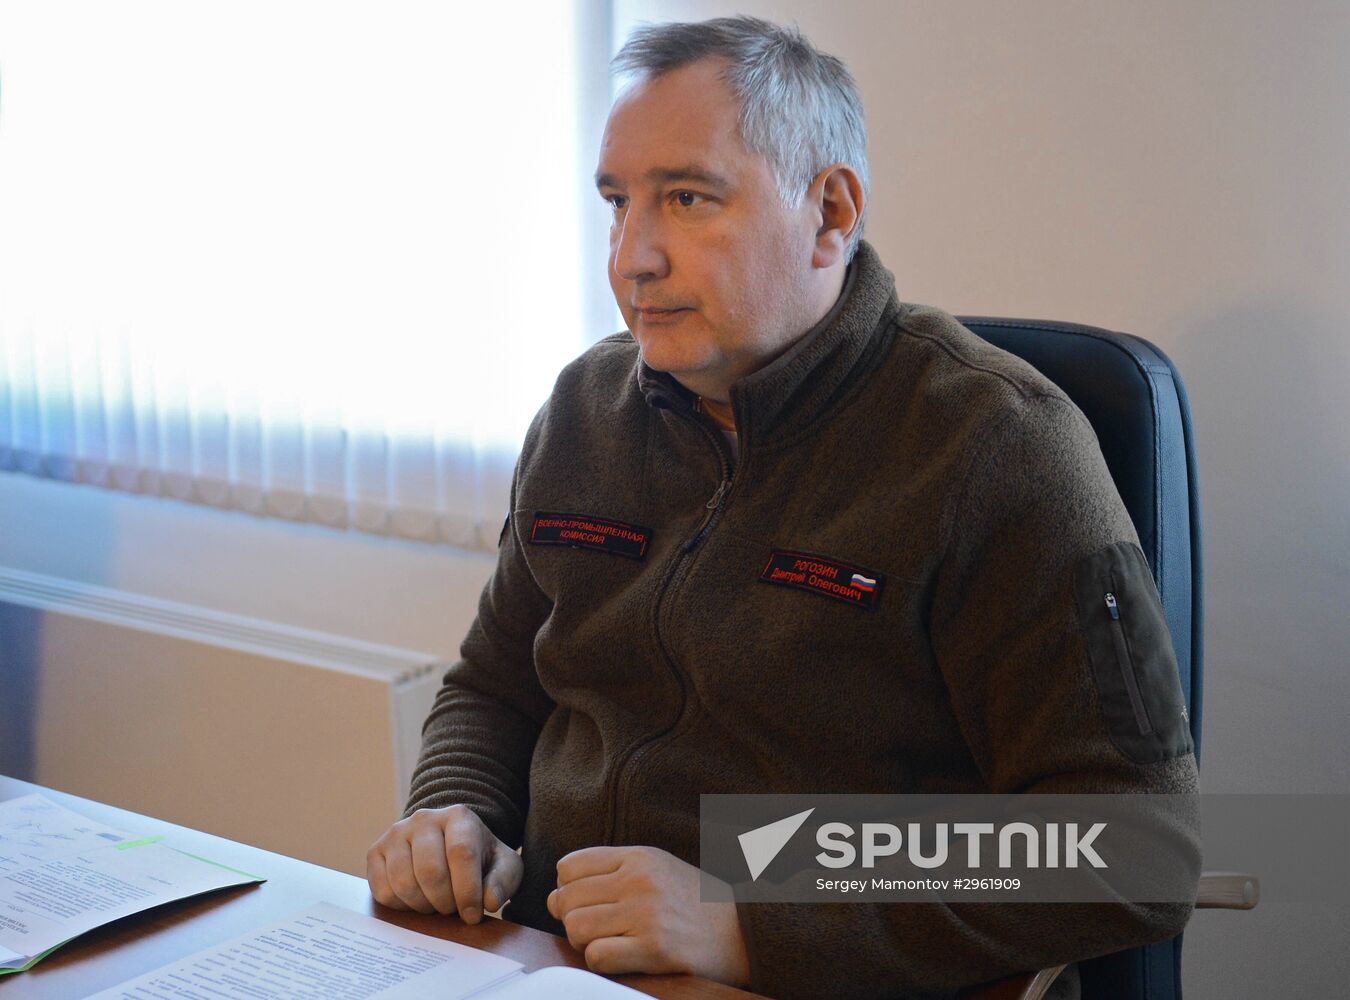 Vice-Prime Minister Dmitry Rogozin visits Vostochny space center